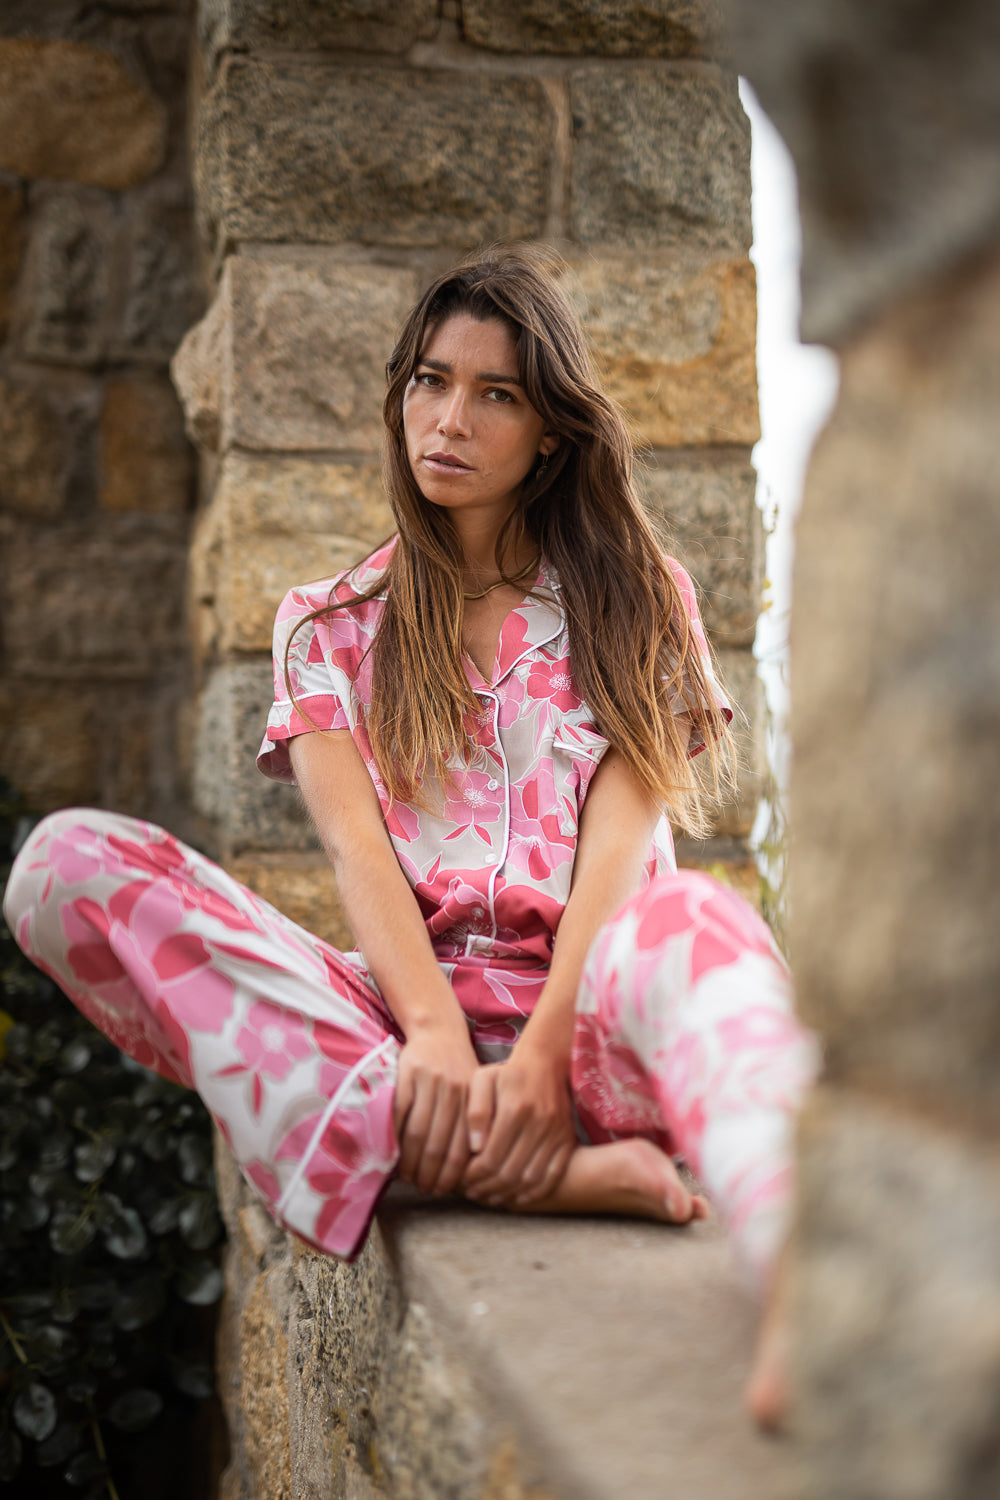 Pijama Madison en Mallorca